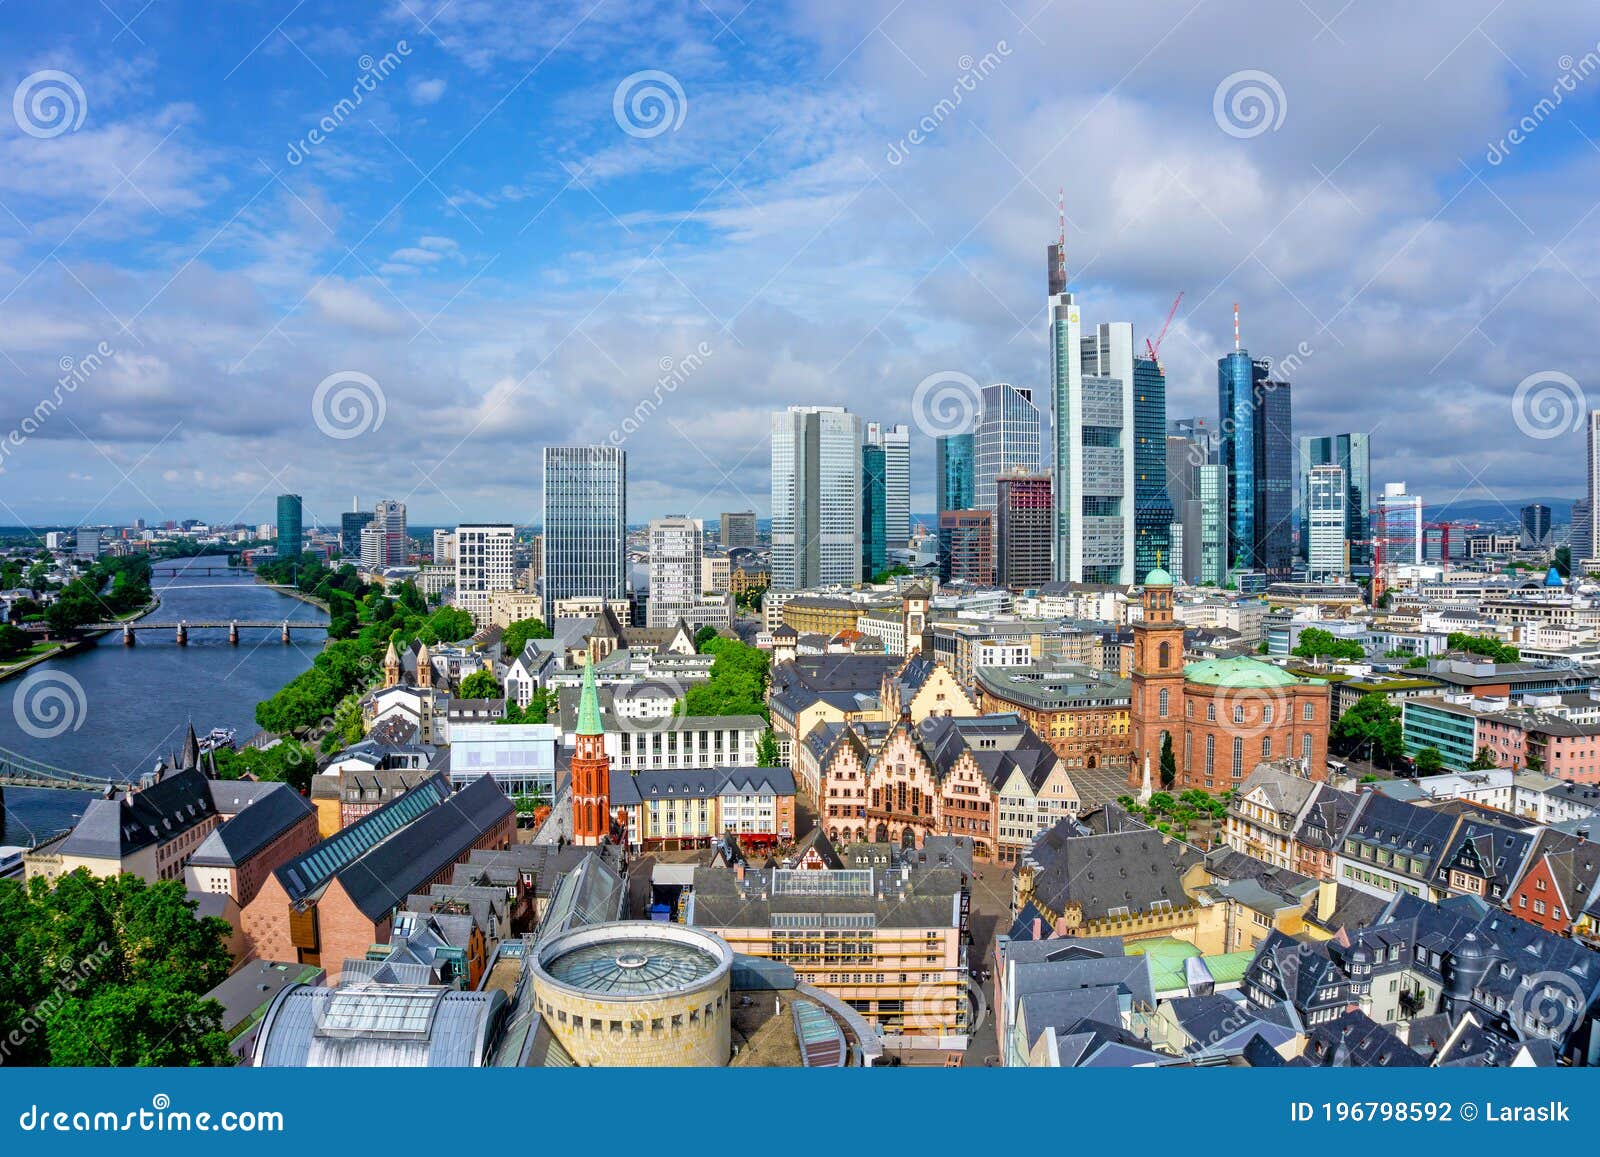 frankfurt skyline in germany